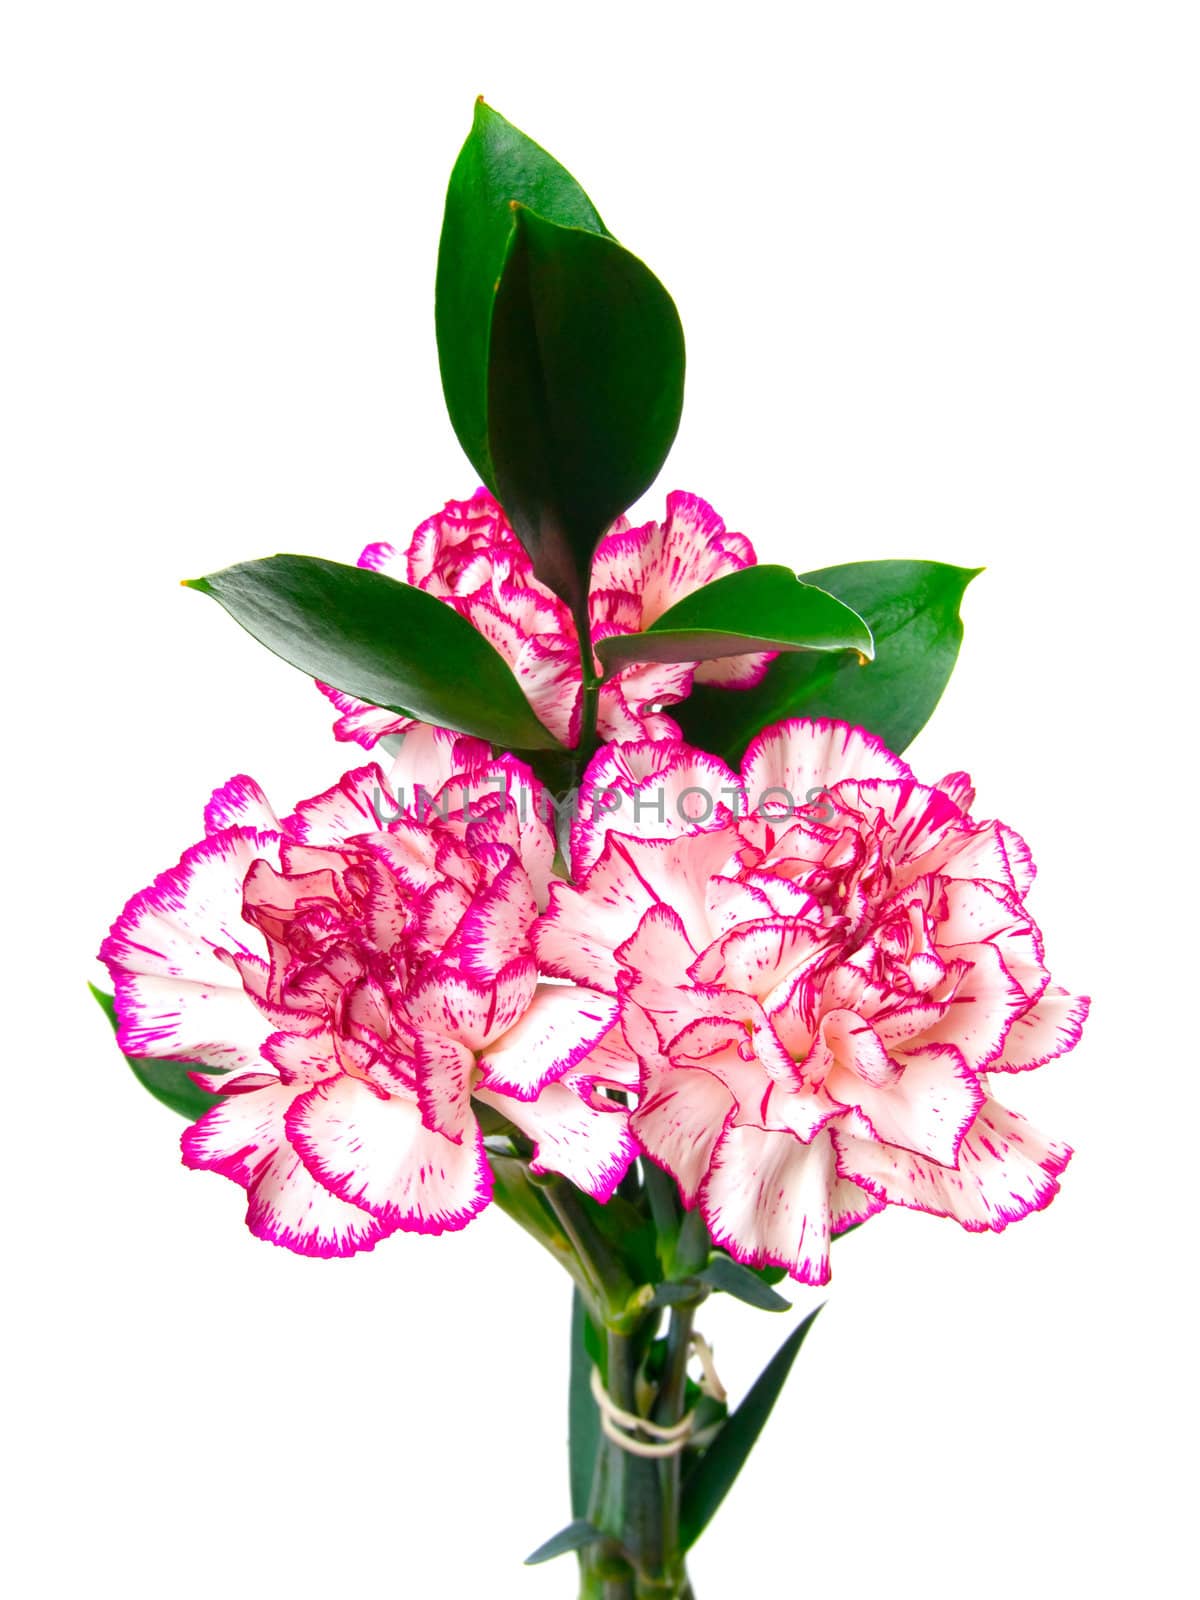 a white pink carnation by motorolka